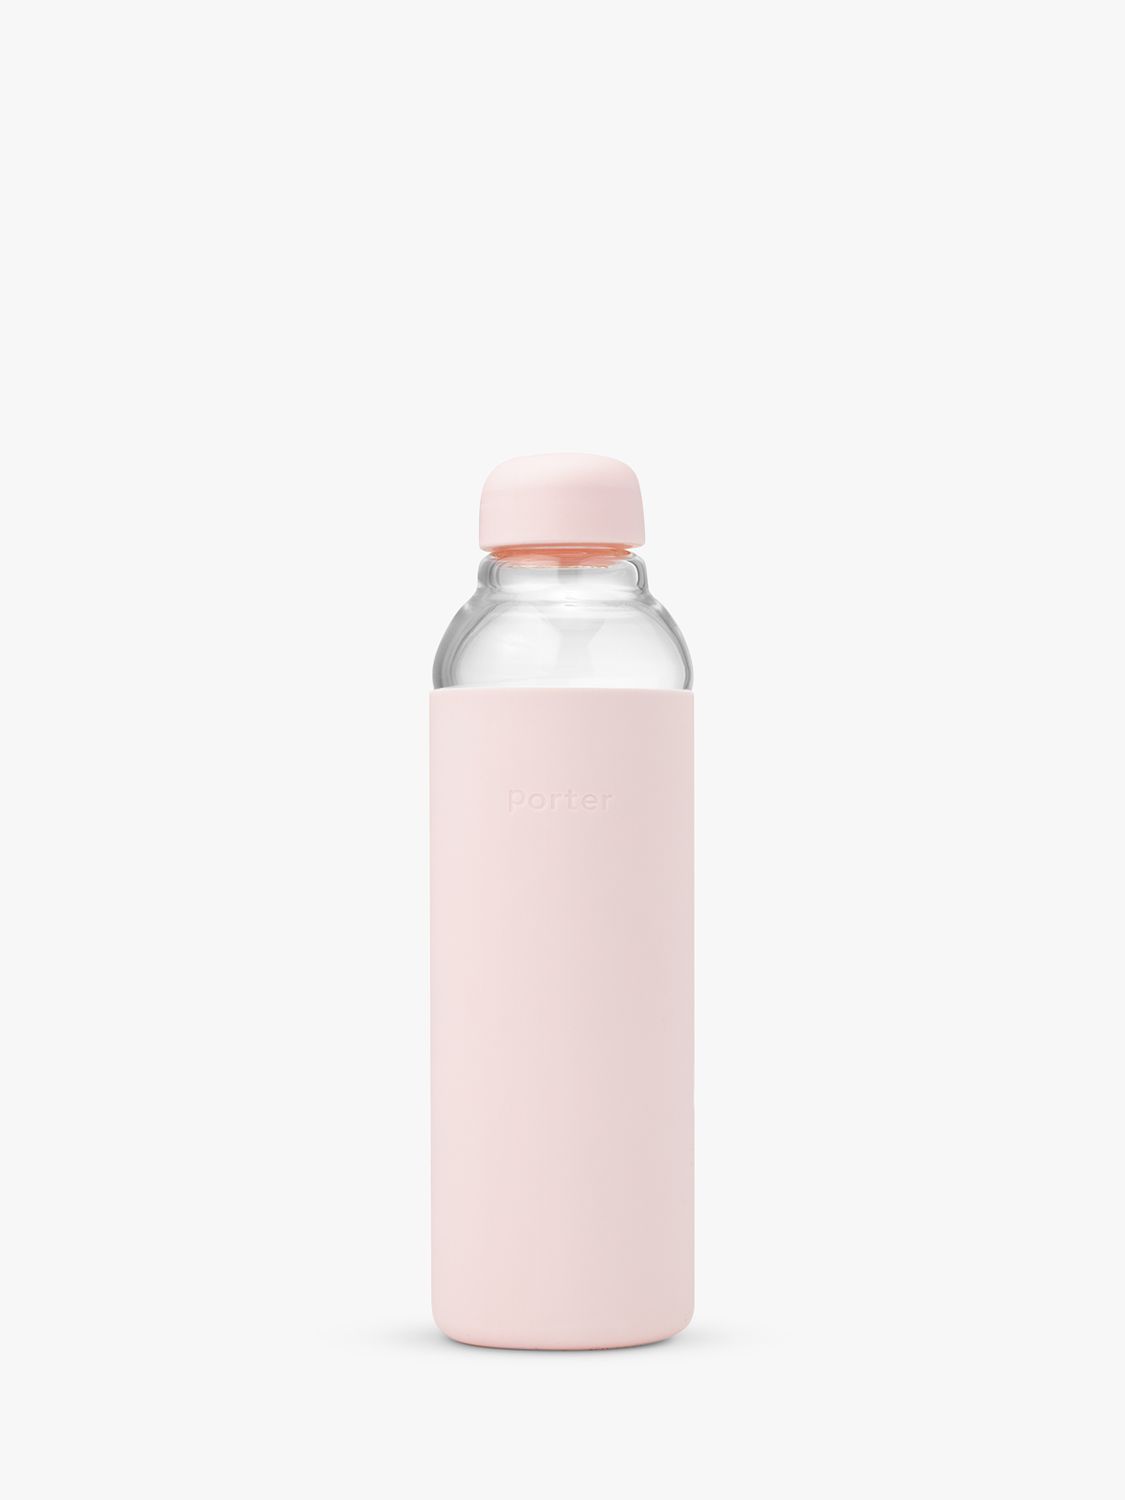 W&P Porter Glass Drinks Bottle, 590ml, Pink